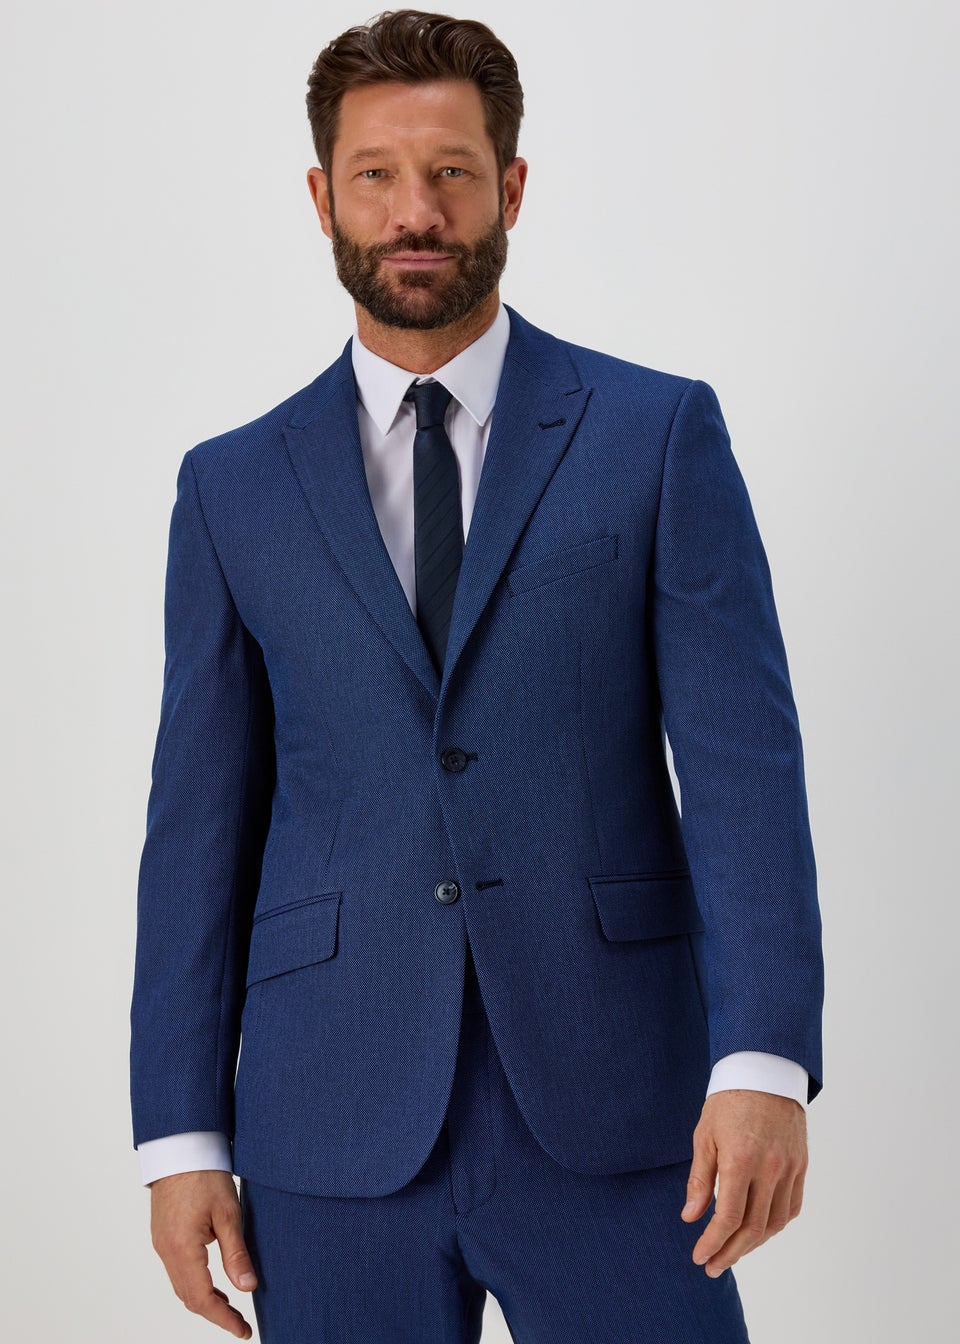 Taylor & Wright Douglas Blue Tailored Fit Suit Jacket